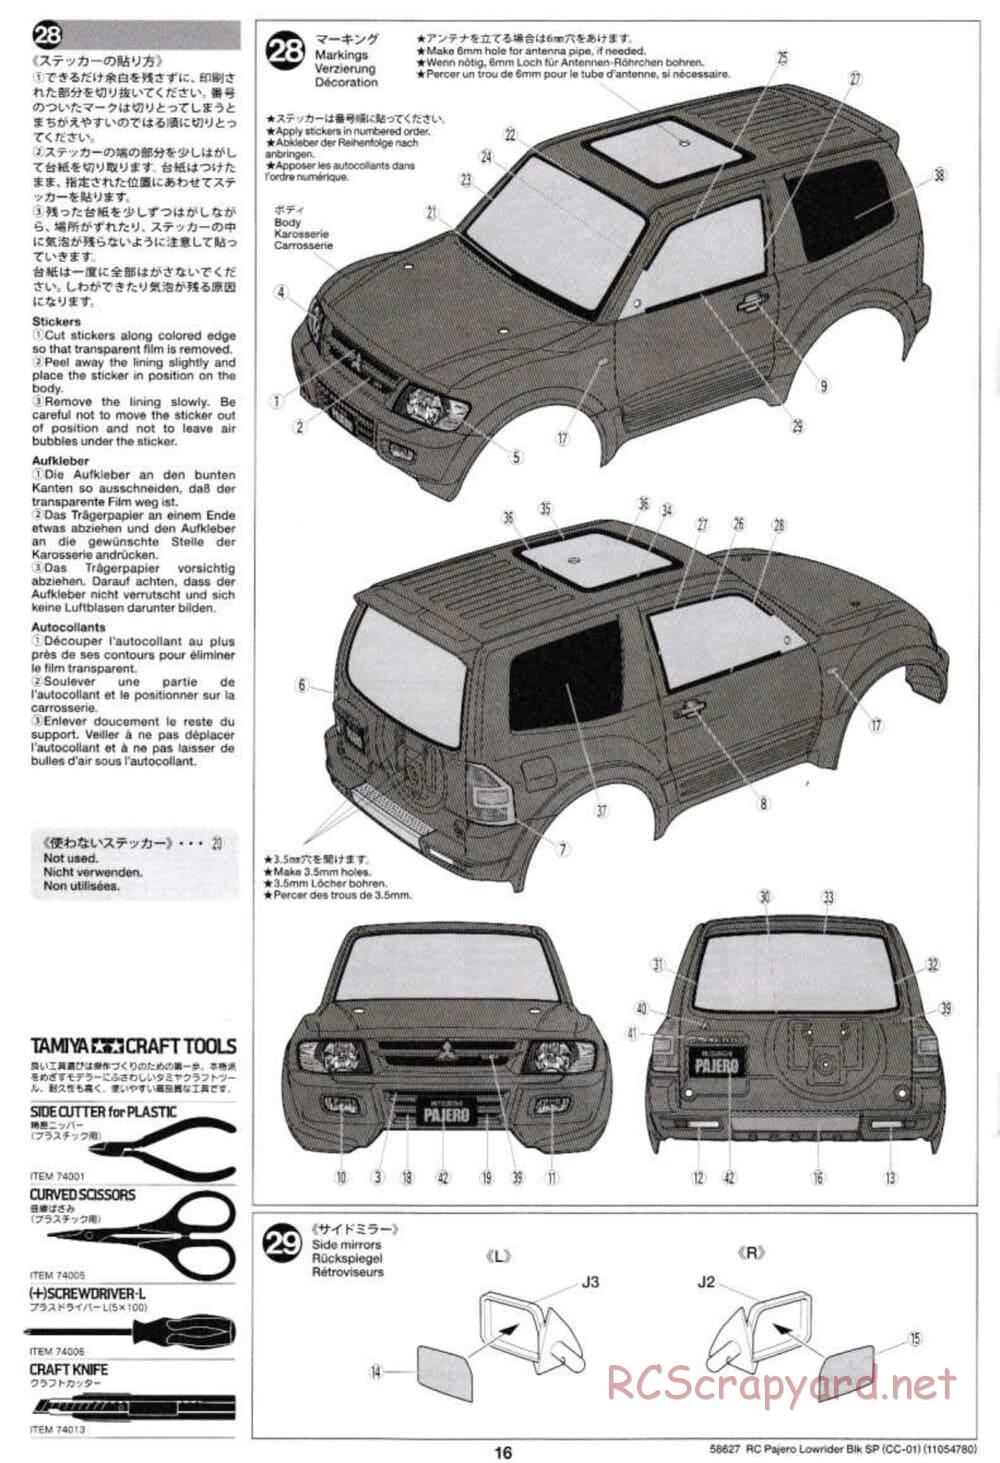 Tamiya - Mitsubishi Pajero Custom Lowrider Black Special - CC-01 Chassis - Manual - Page 16